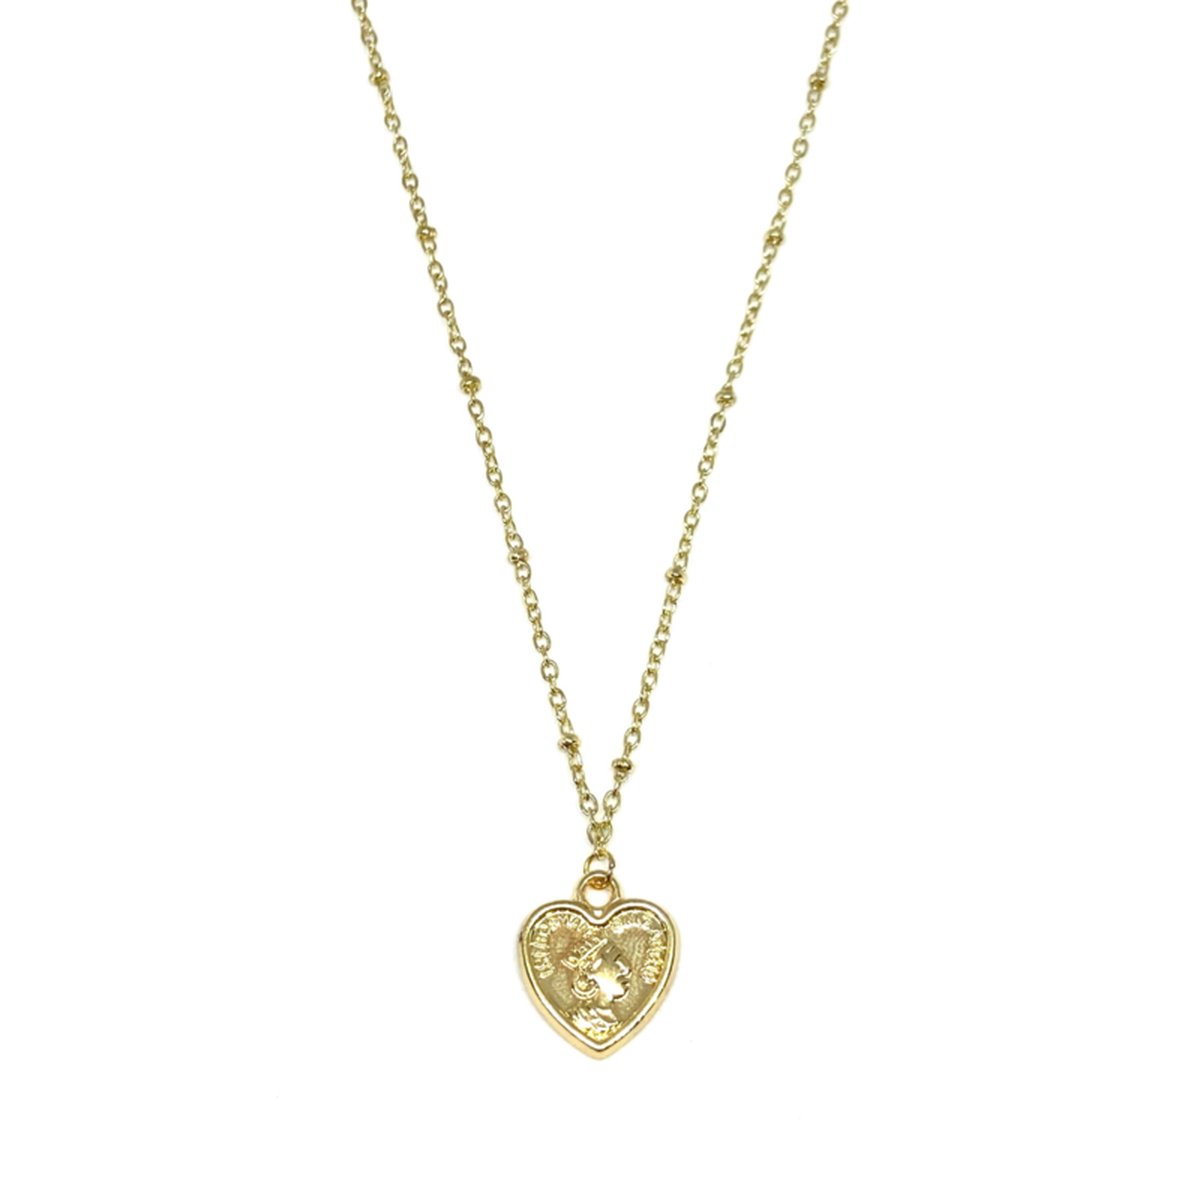 Elizabeth heart necklace - gold